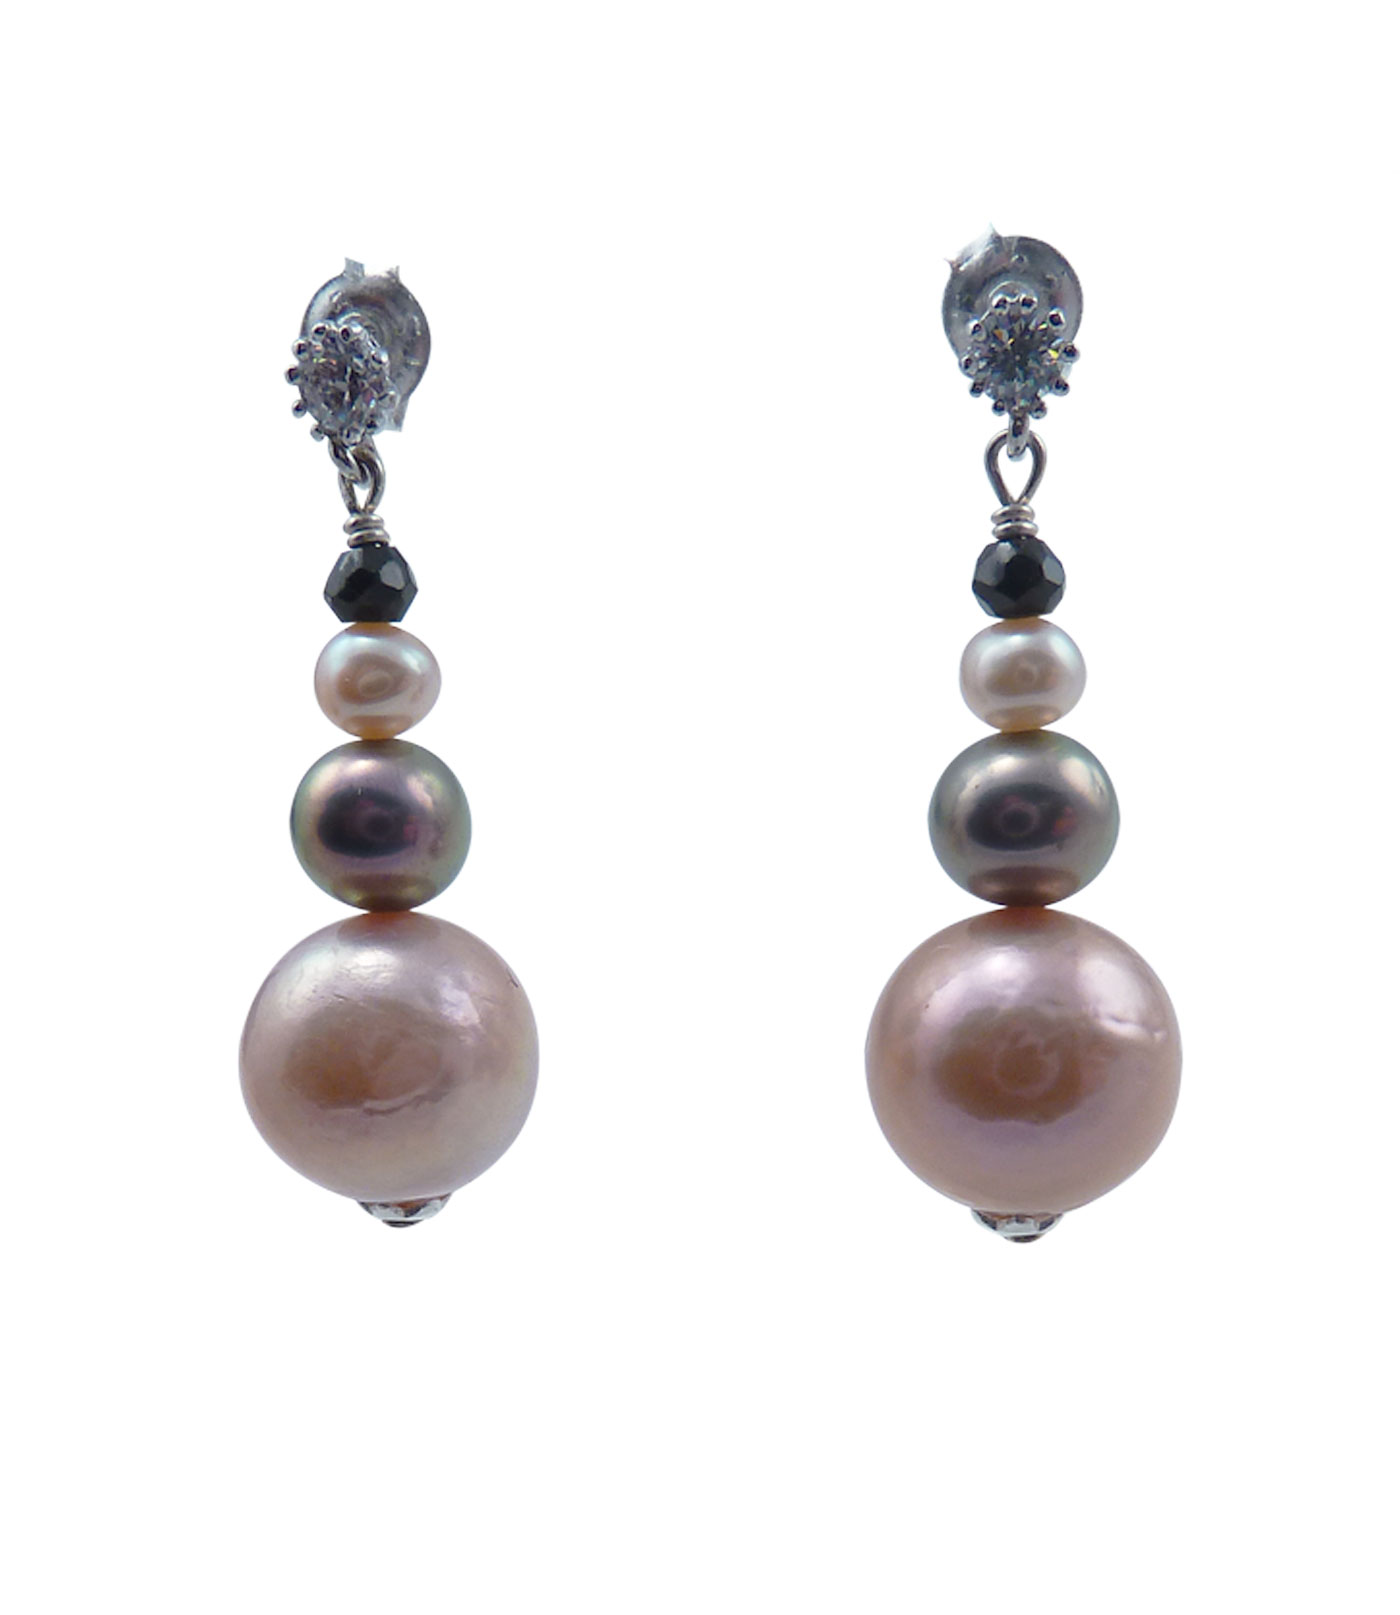 Designer pearl earrings pink silvery bluish pearls with black spinel